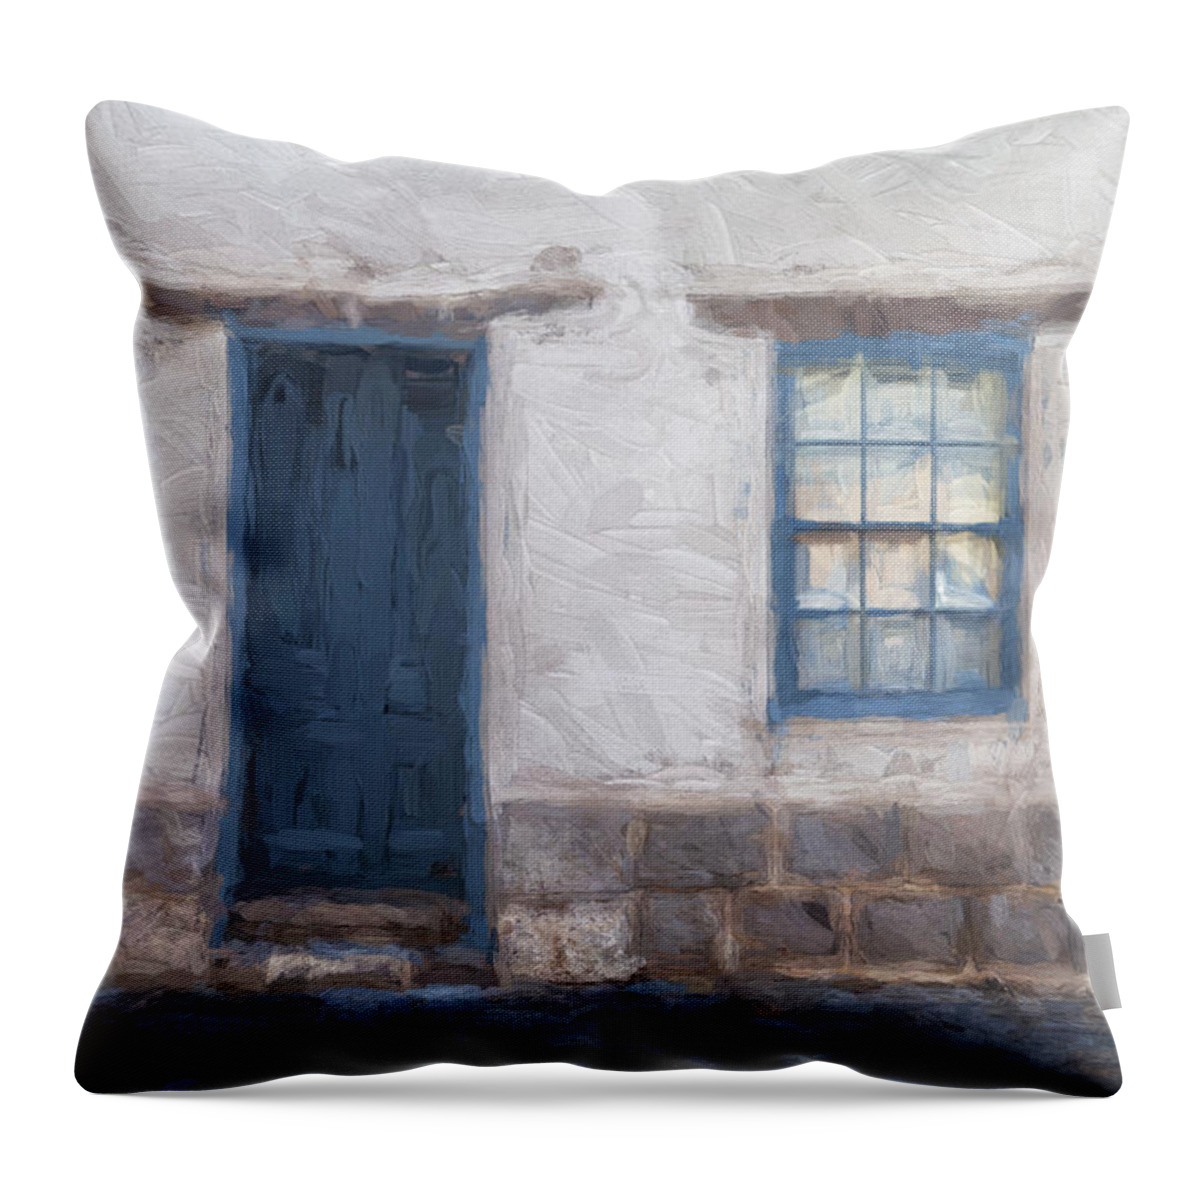 Arizona Throw Pillow featuring the mixed media Barrio Historico Tucson Painterly Look by Carol Leigh